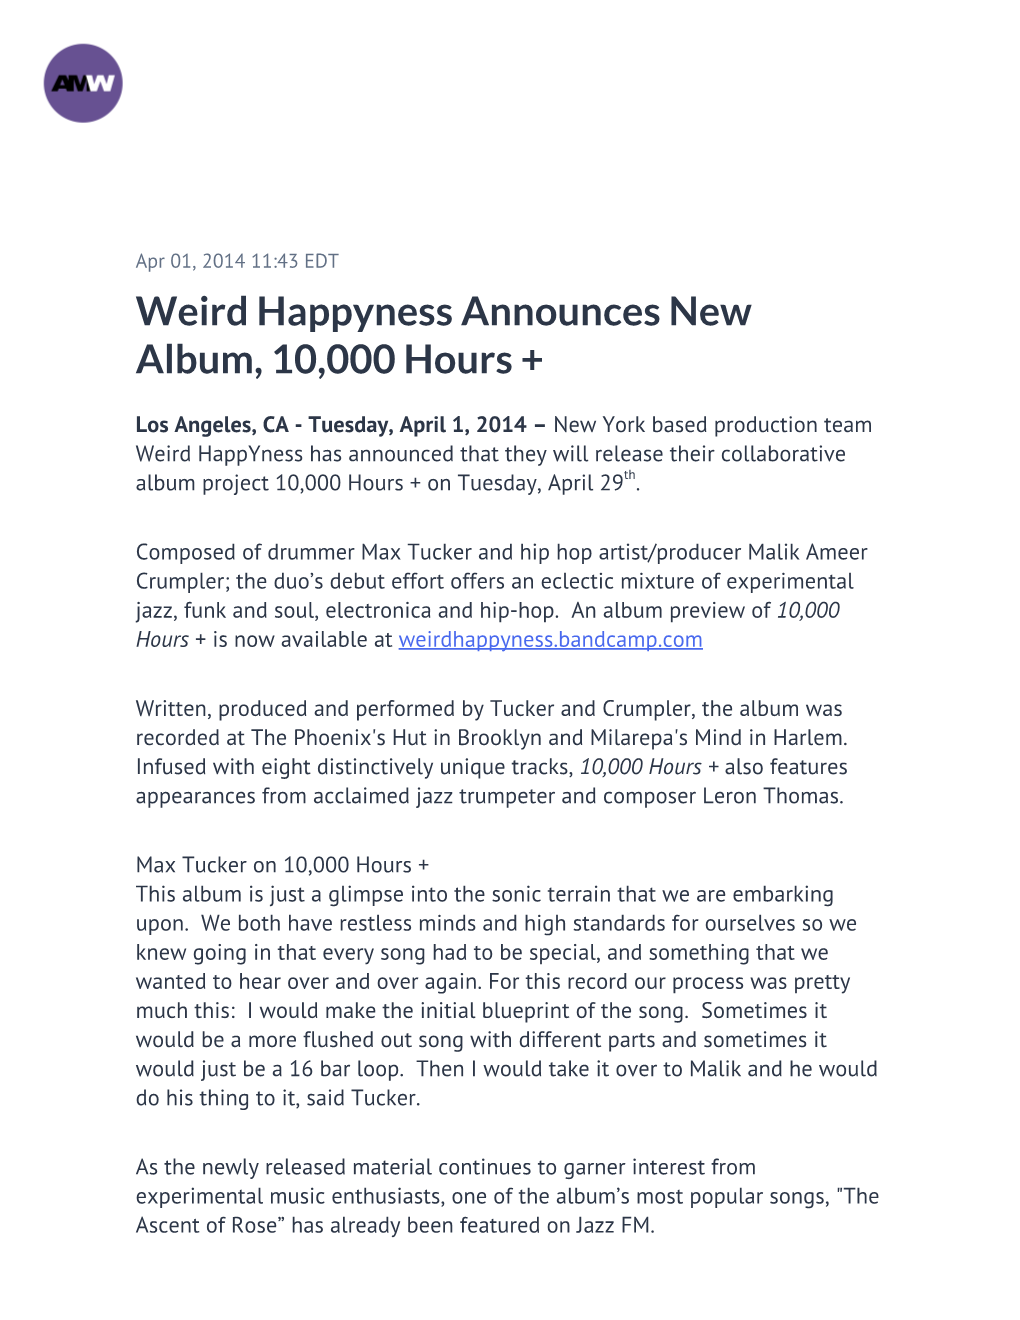 Weird Happyness Announces New Album, 10000